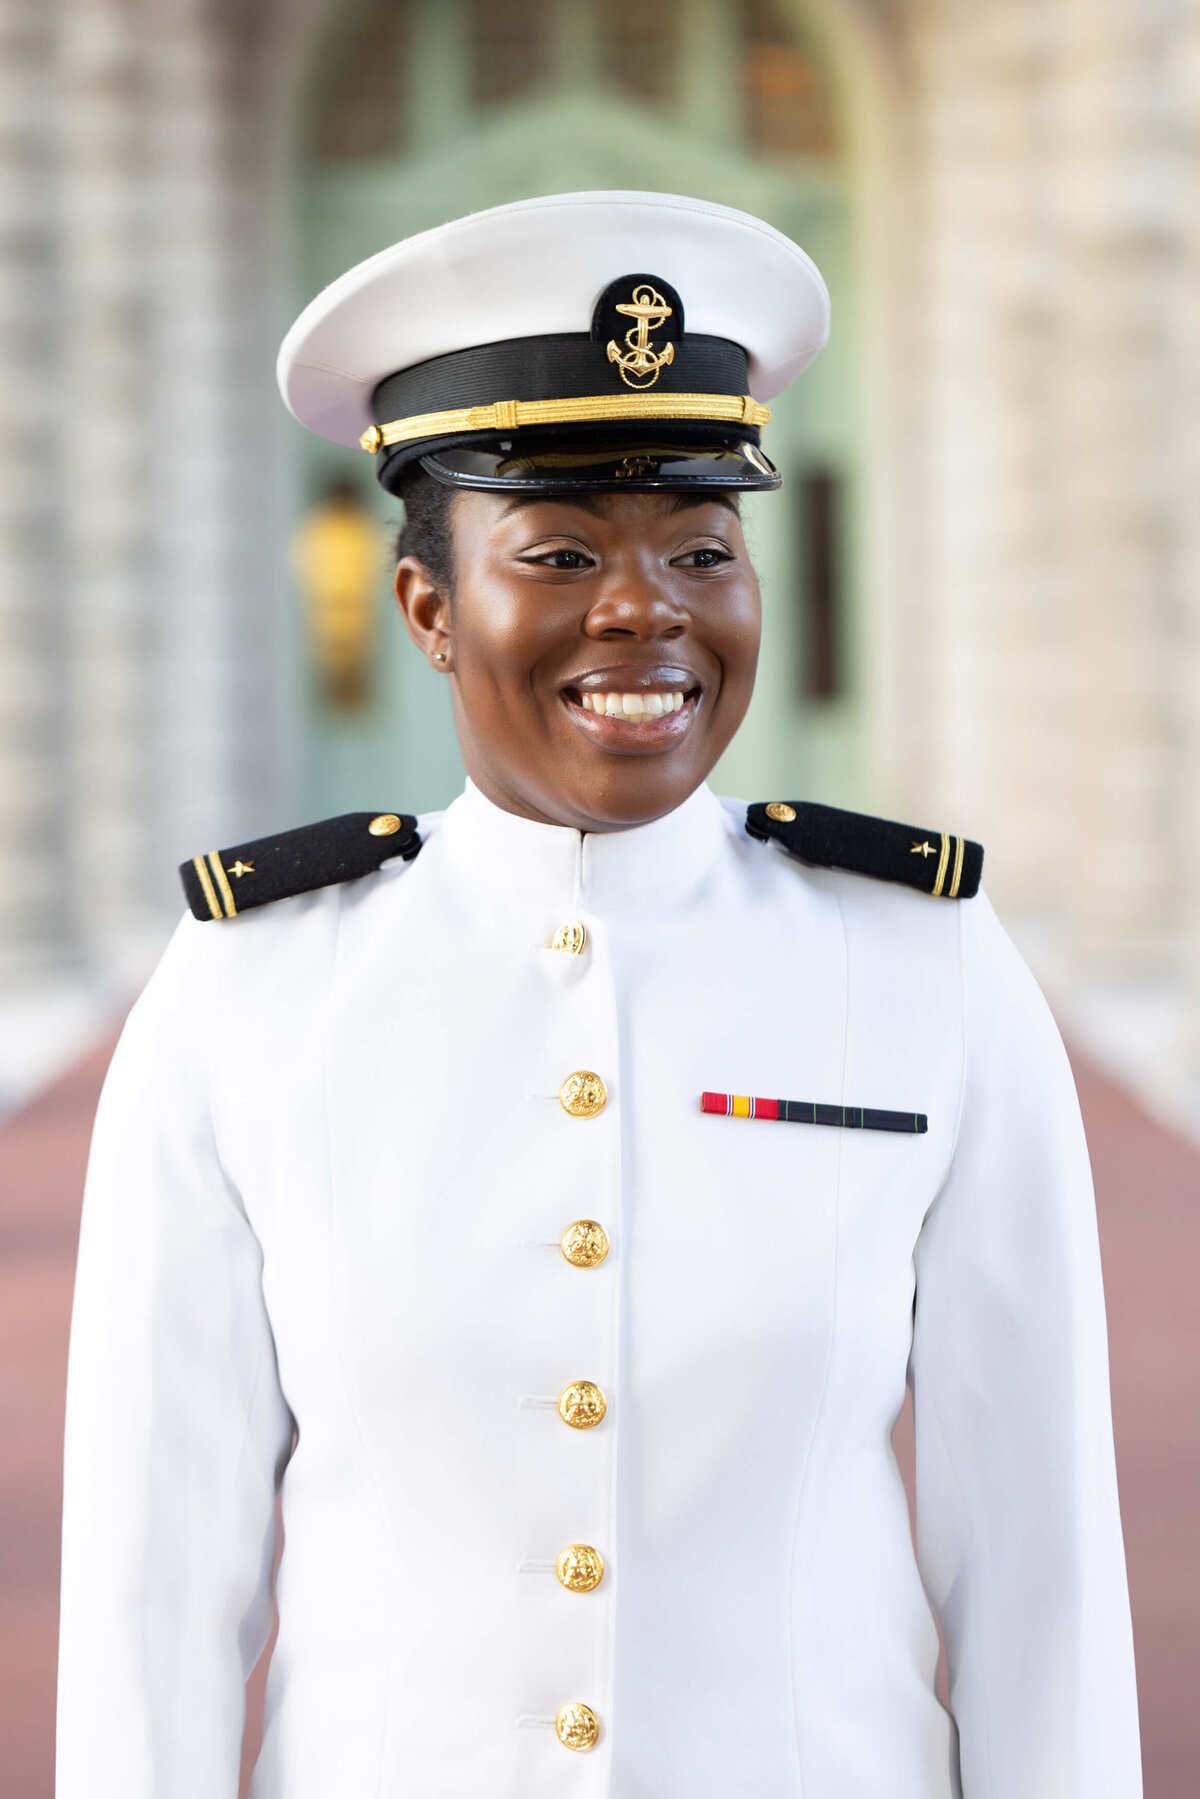 Navy officer in white uniform.